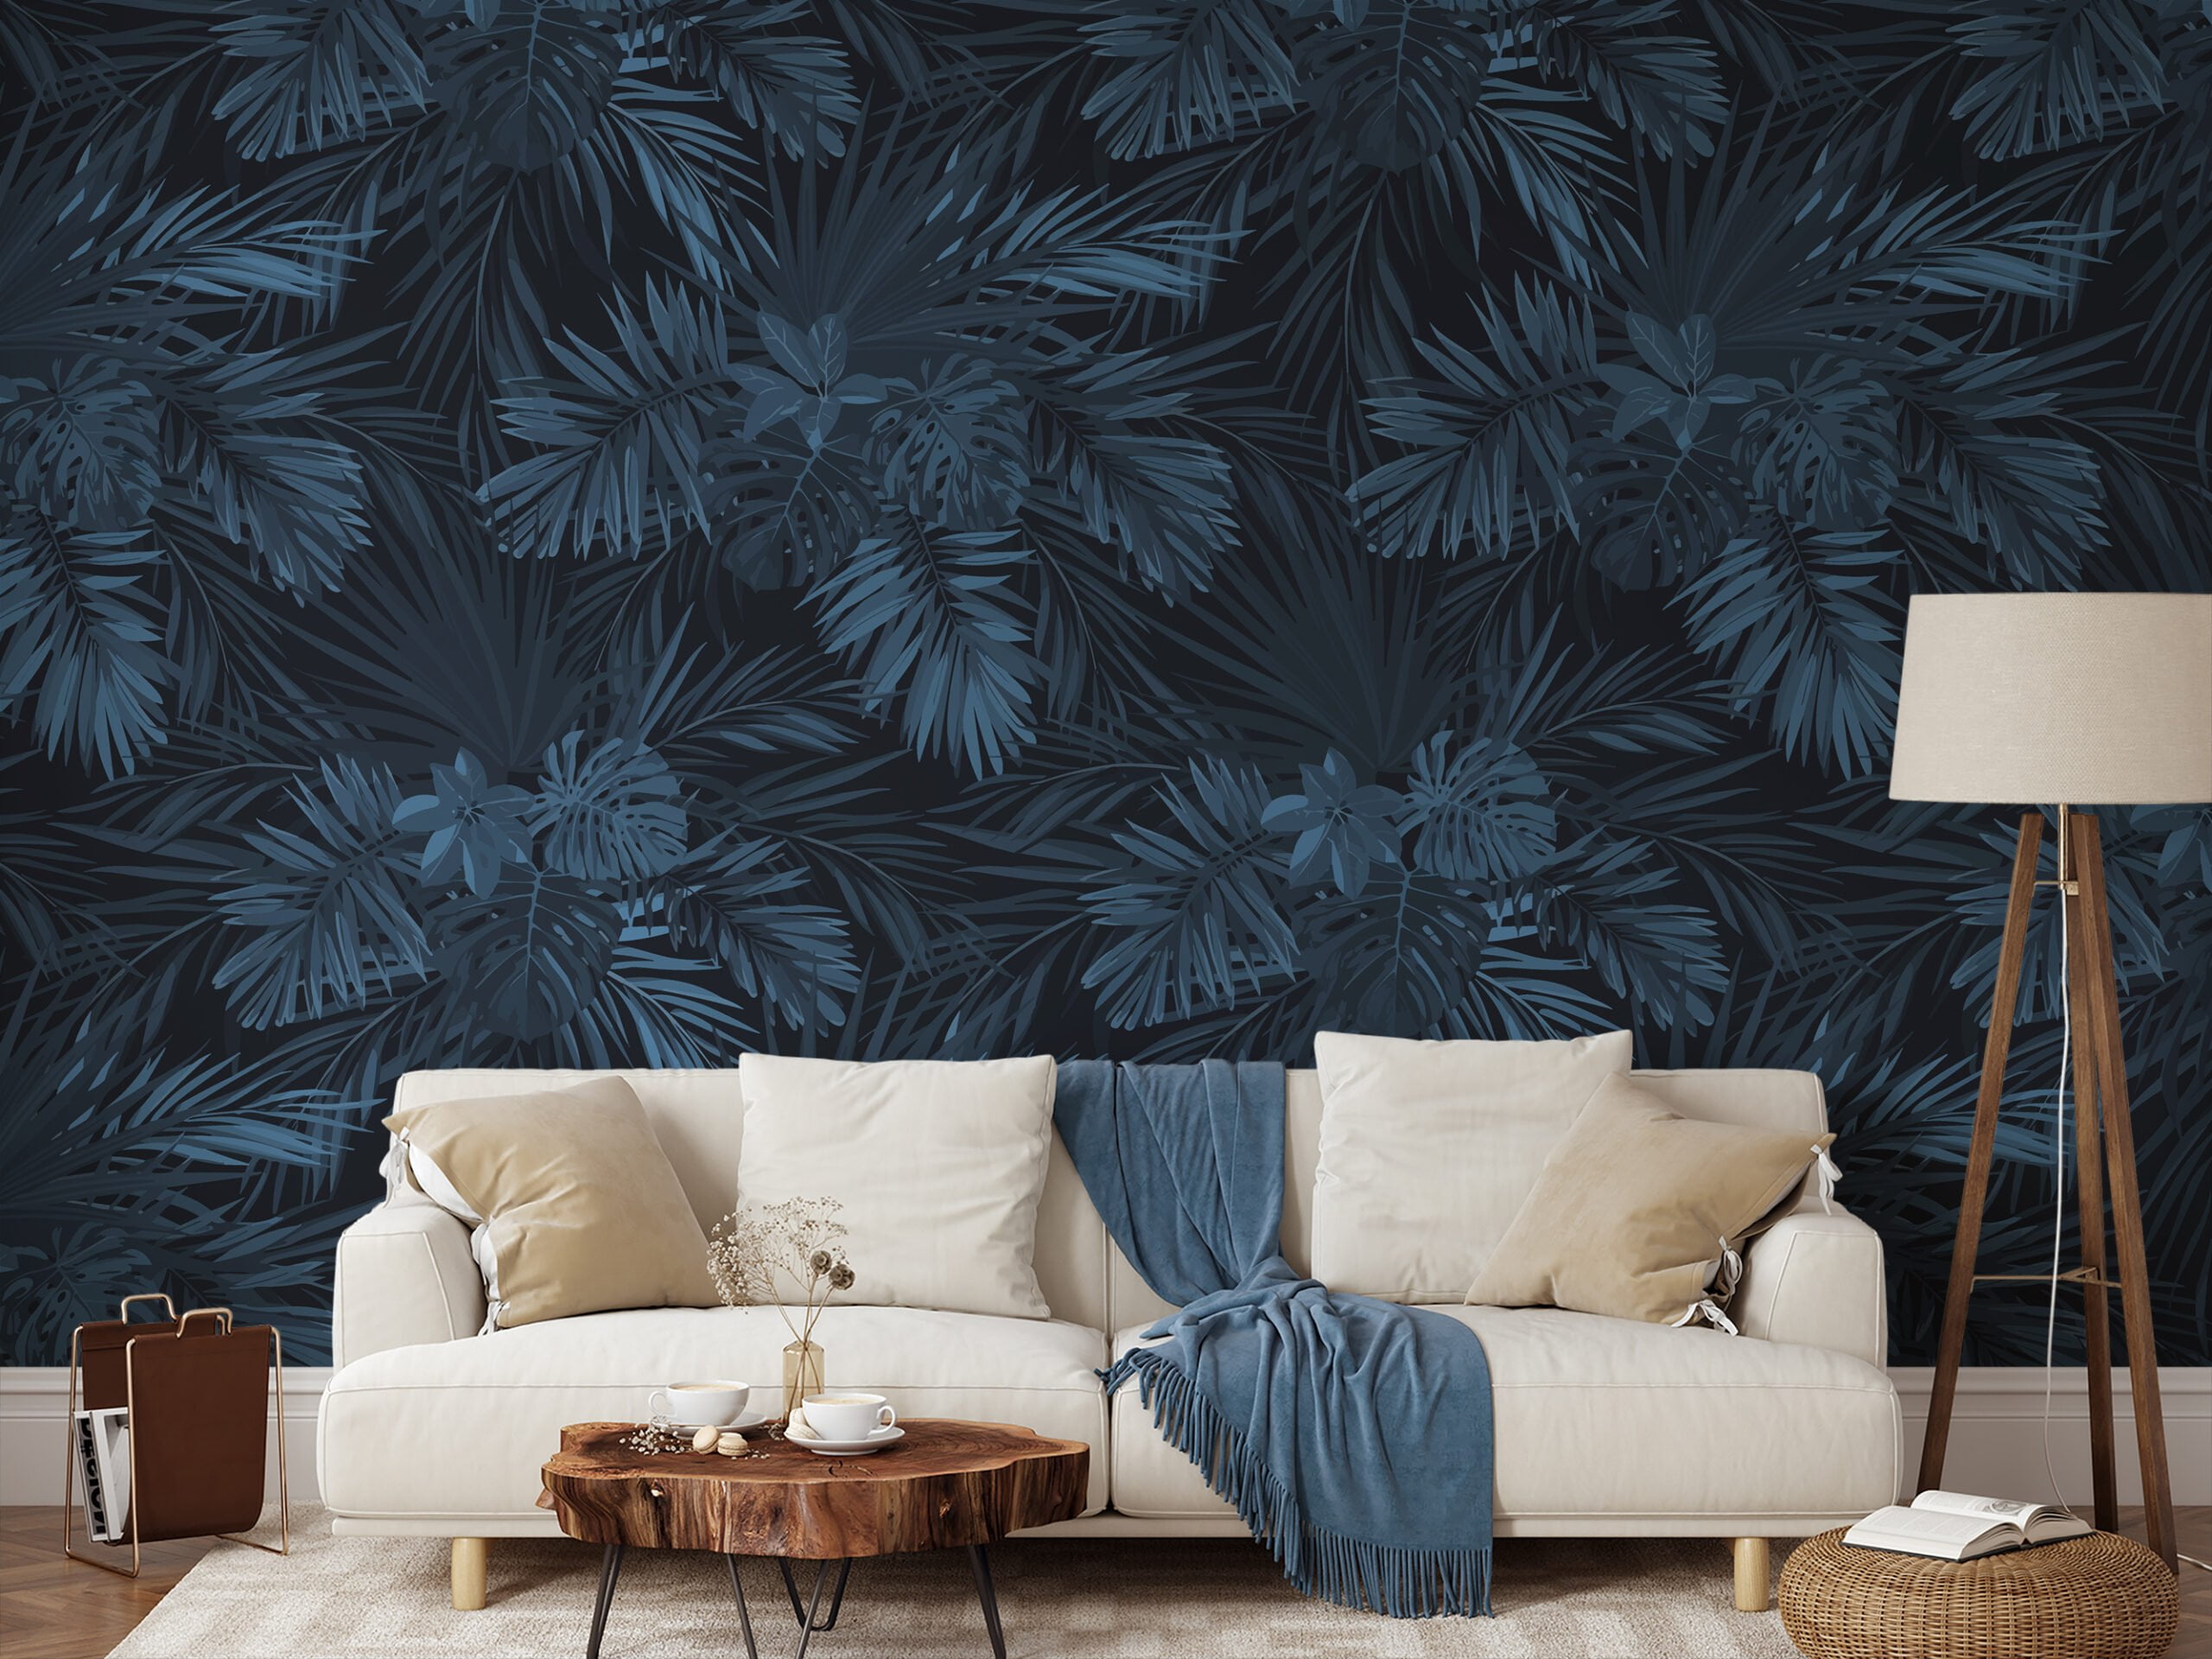 Midnight Blue Tropical Leaves Illustration Wallpaper, Luxury Dark Peel ...